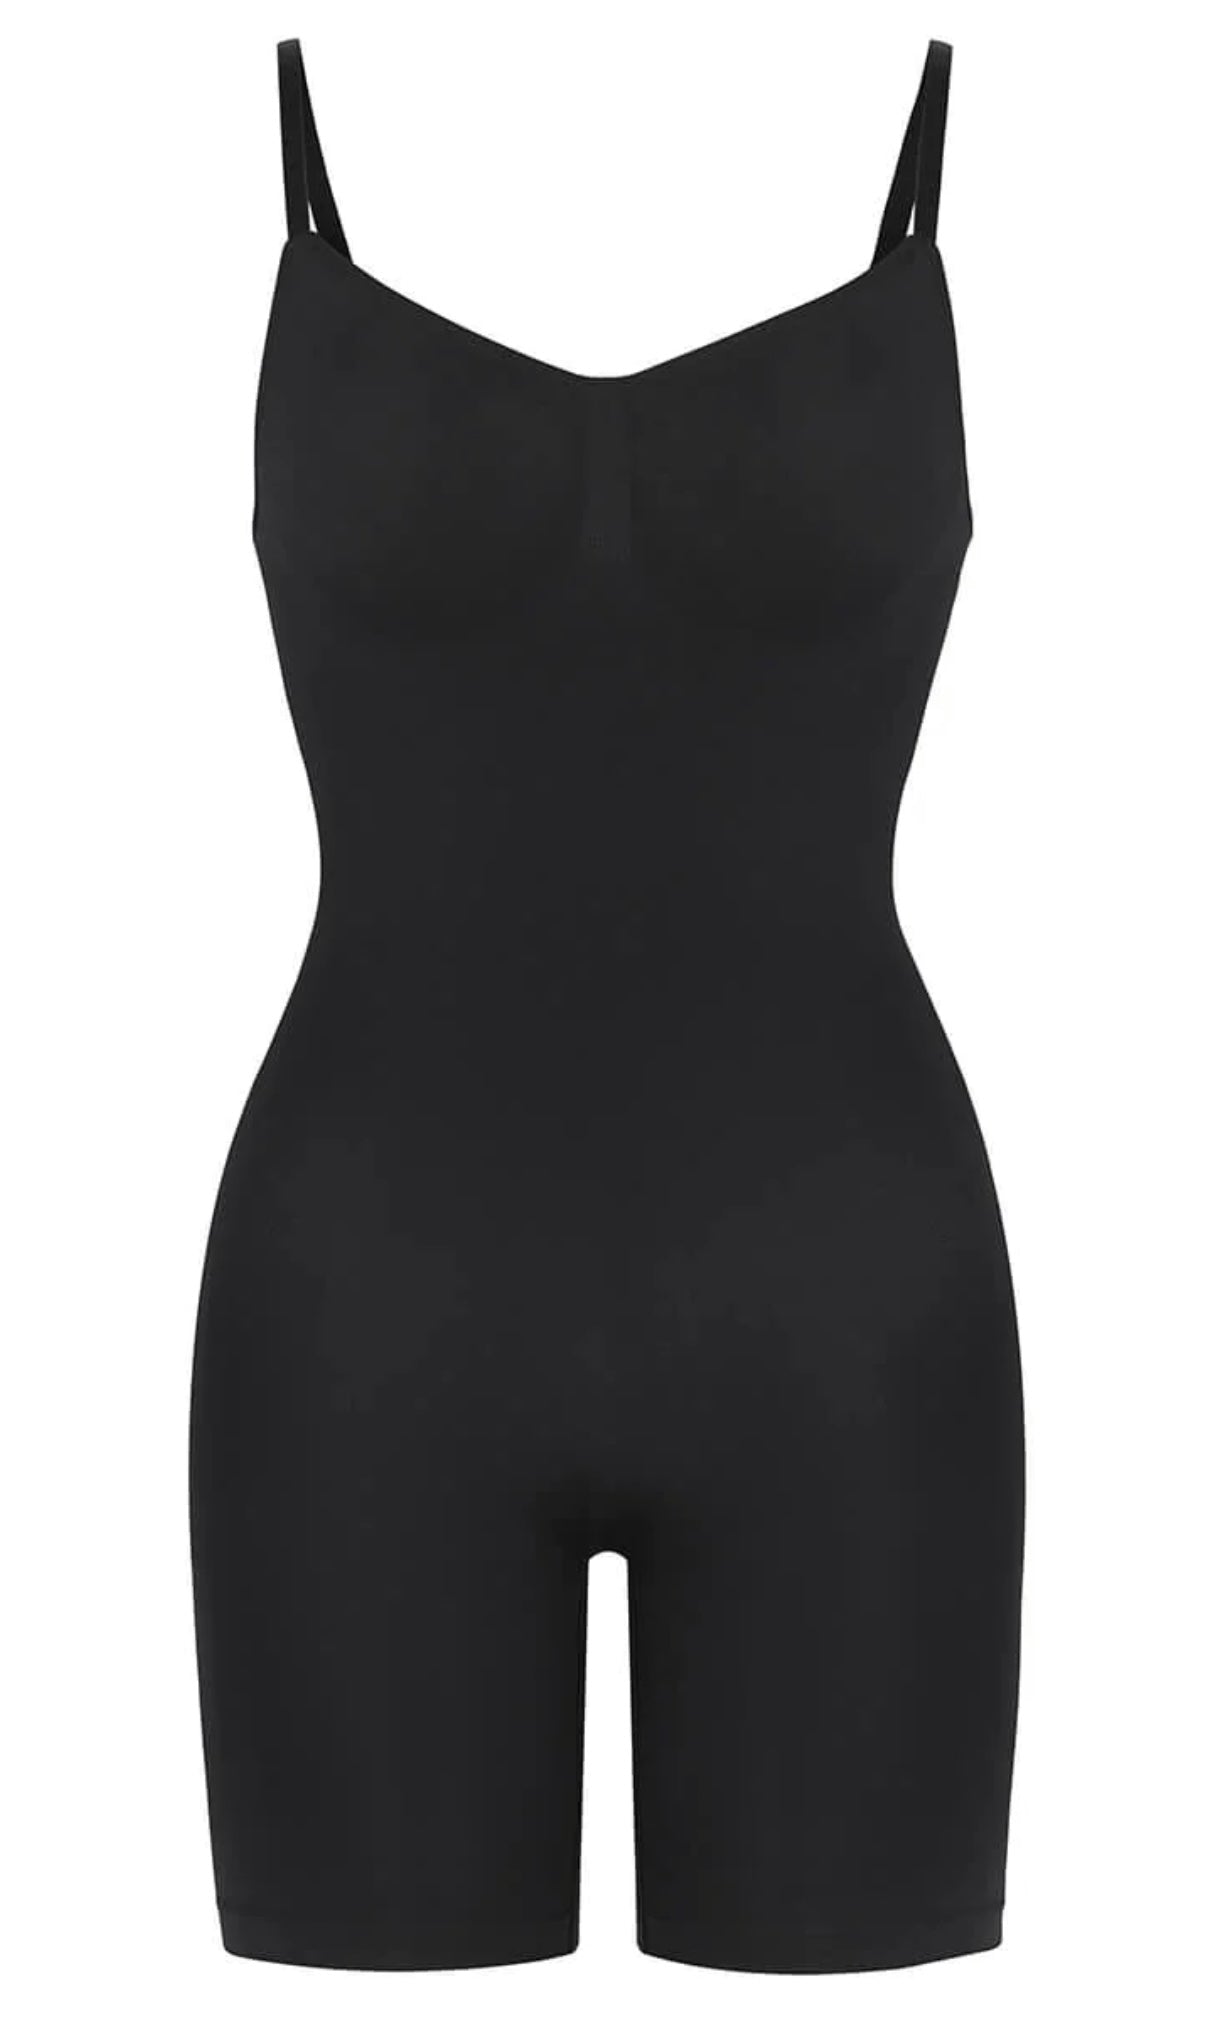 Seamless Full Body Shaper Bodysuit: Tummy Control, Open Crotch